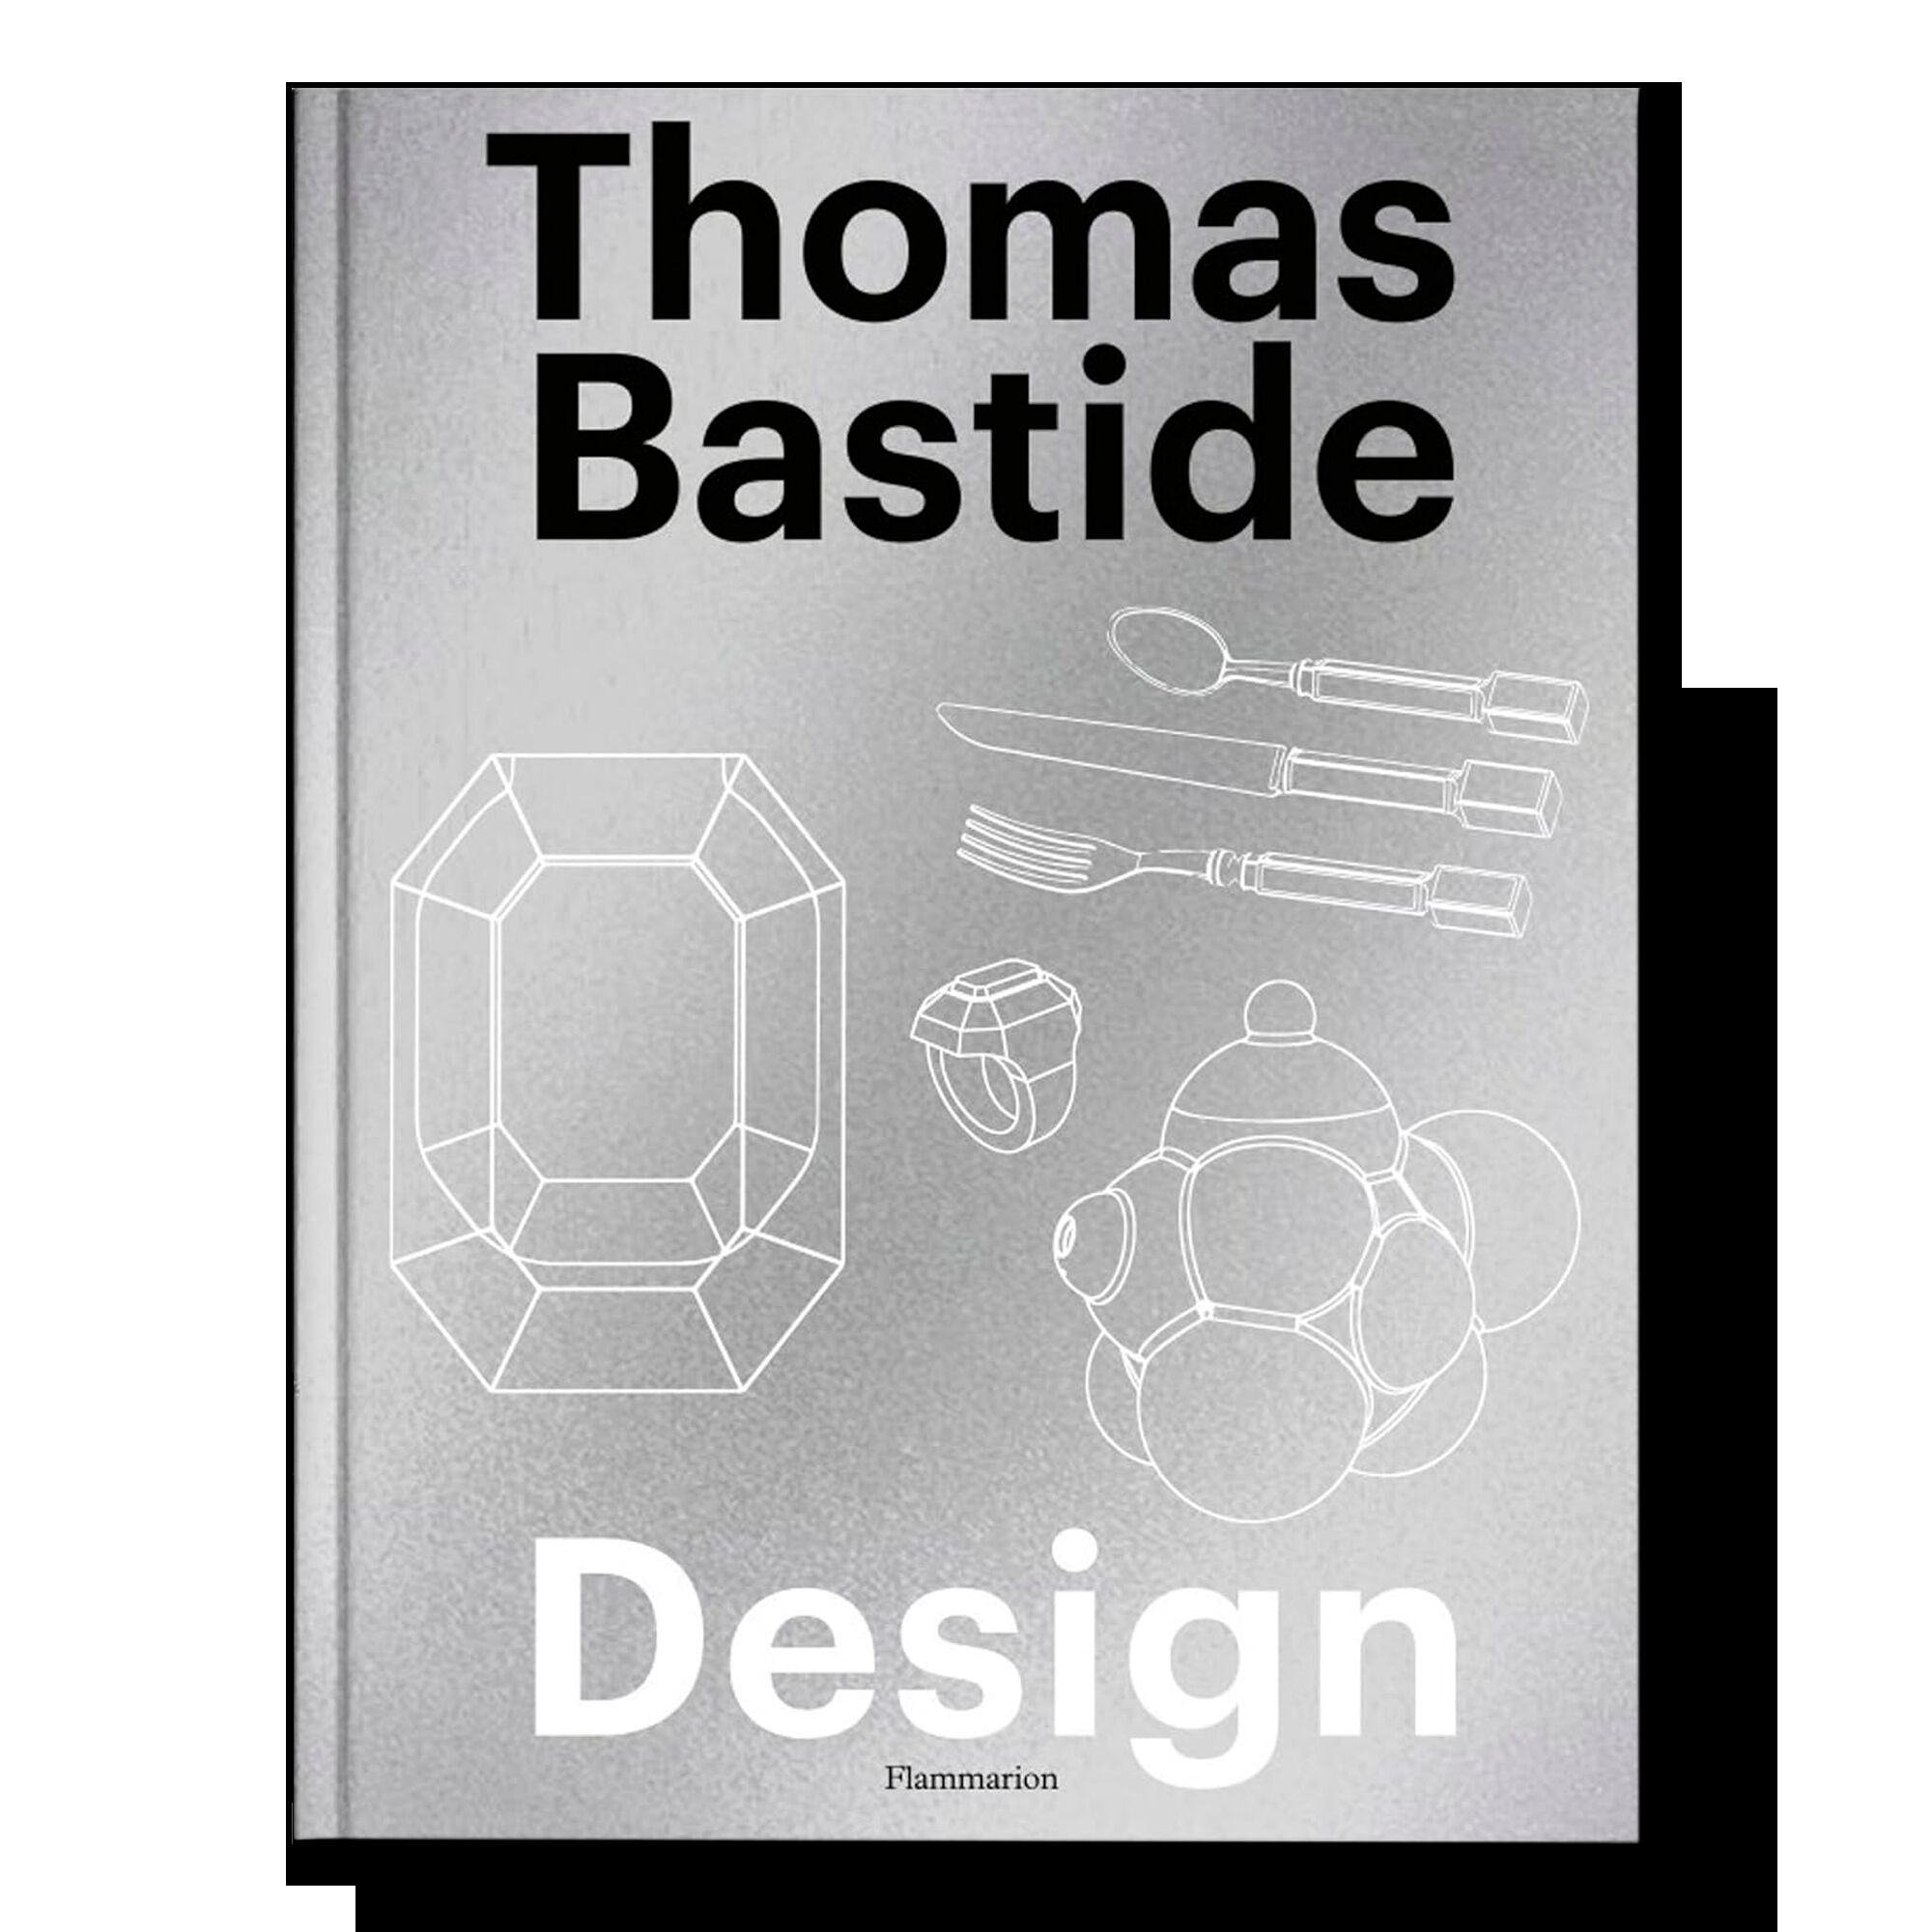 Thomas Bastide: Design